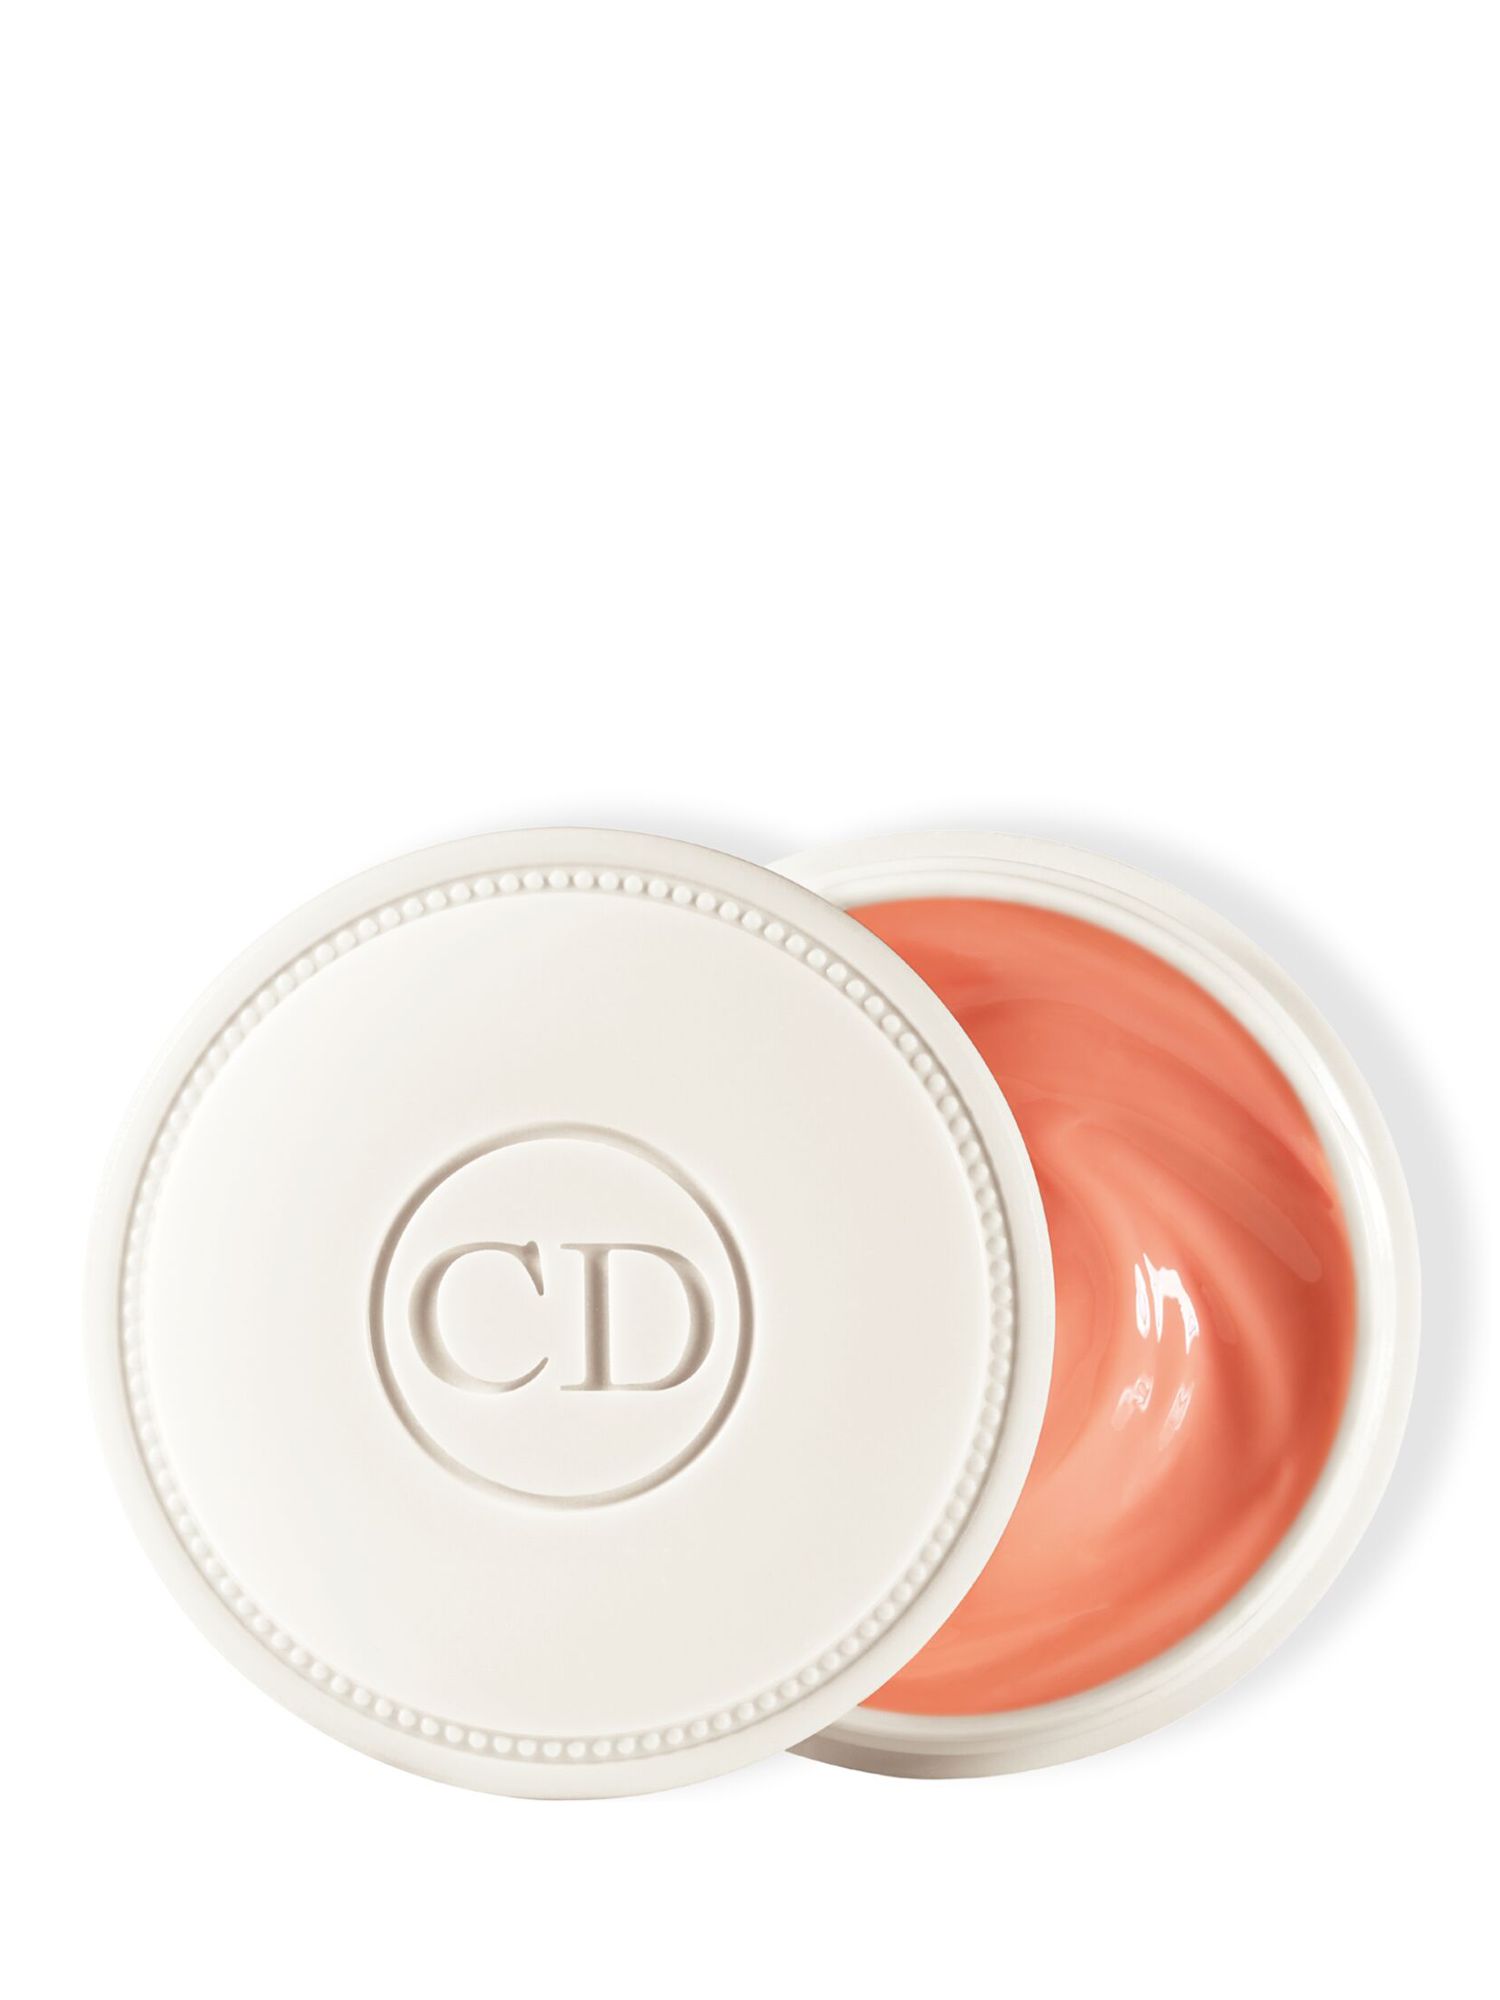 Buy Dior Nail Apricot Cream Online at johnlewis.com